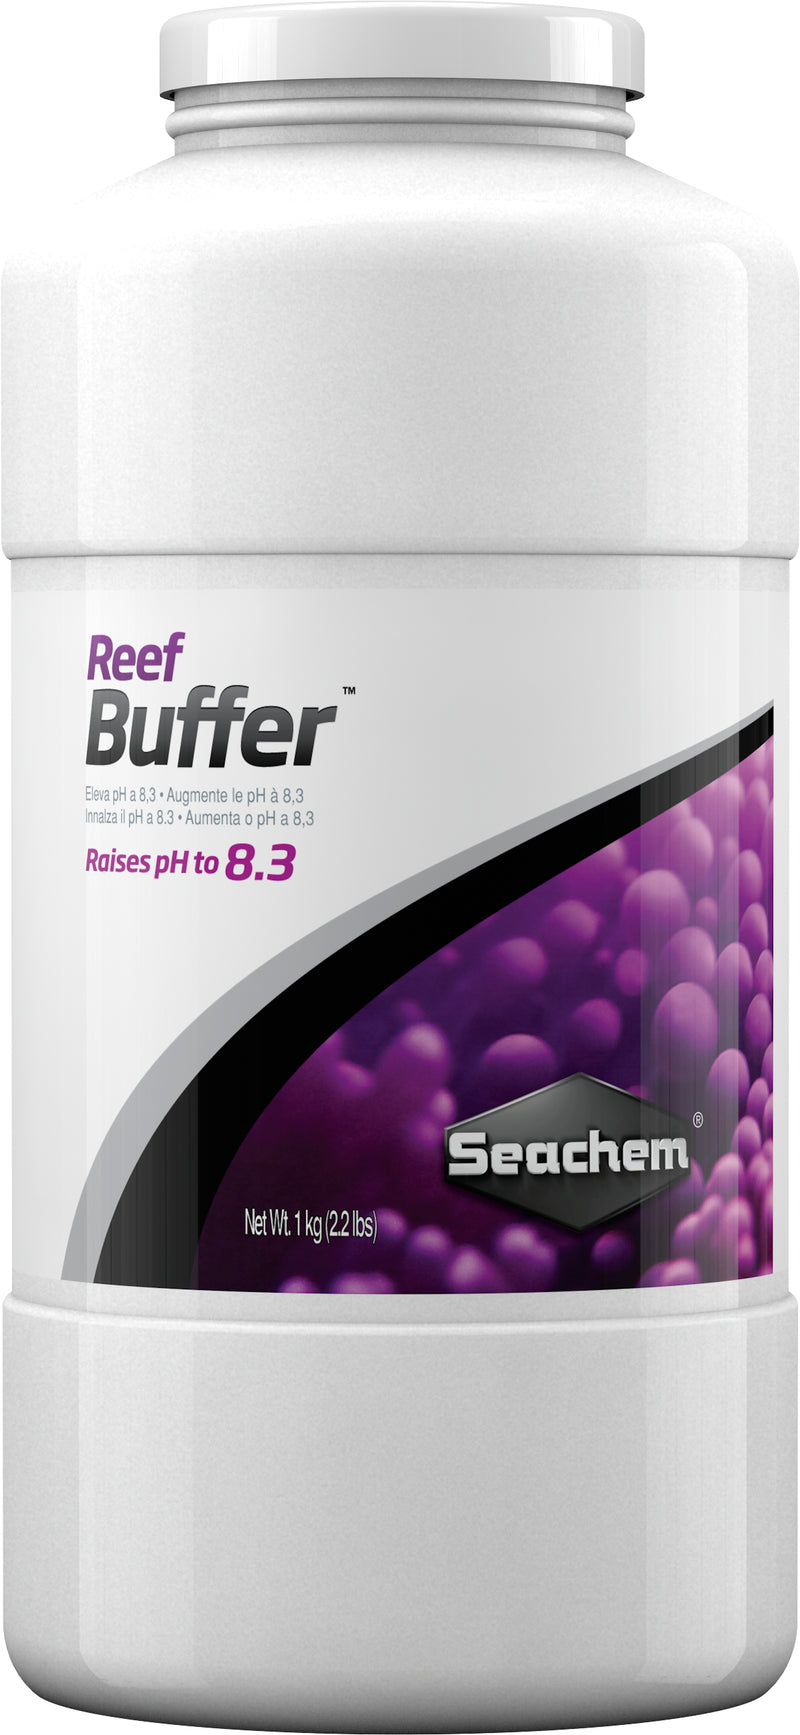 Seachem Reef Buffer - 1 kg